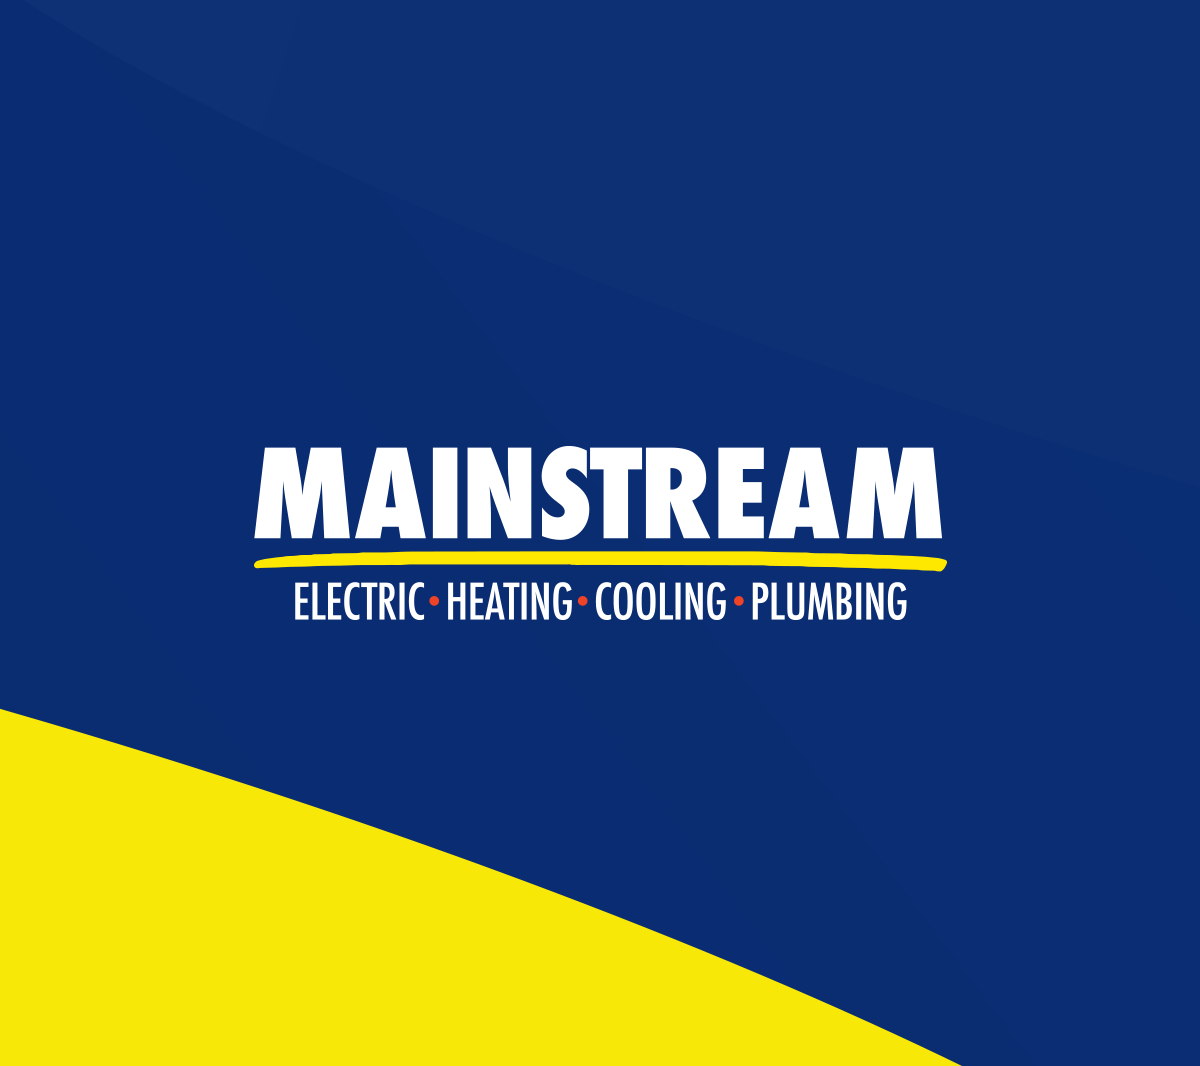 Mainstream Electric, Heating, Cooling & Plumbing Logo